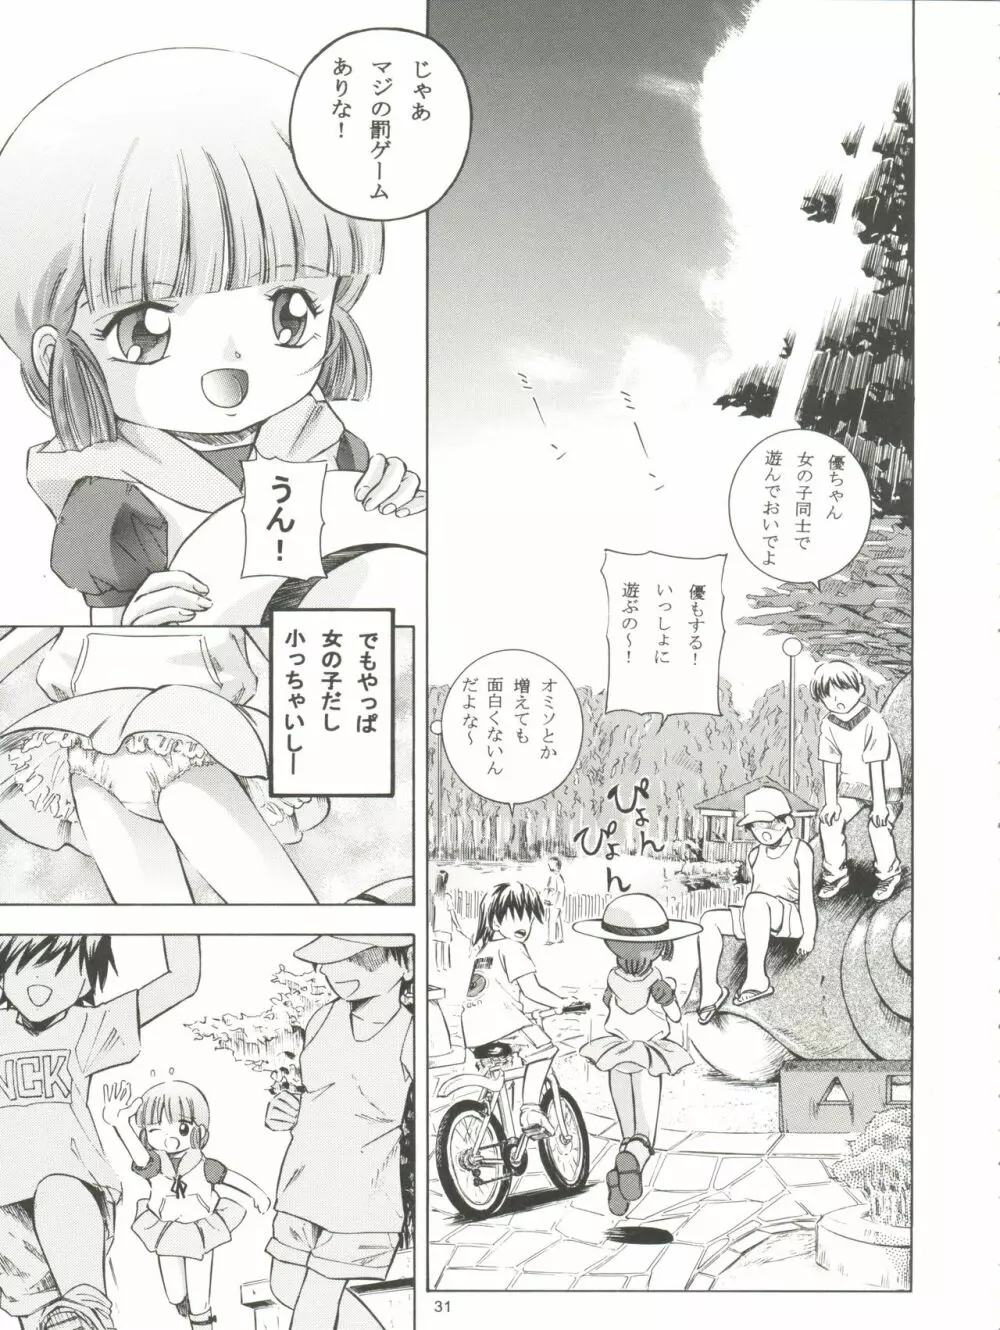 魔法旧式 17 魔女っ子丼! - page31